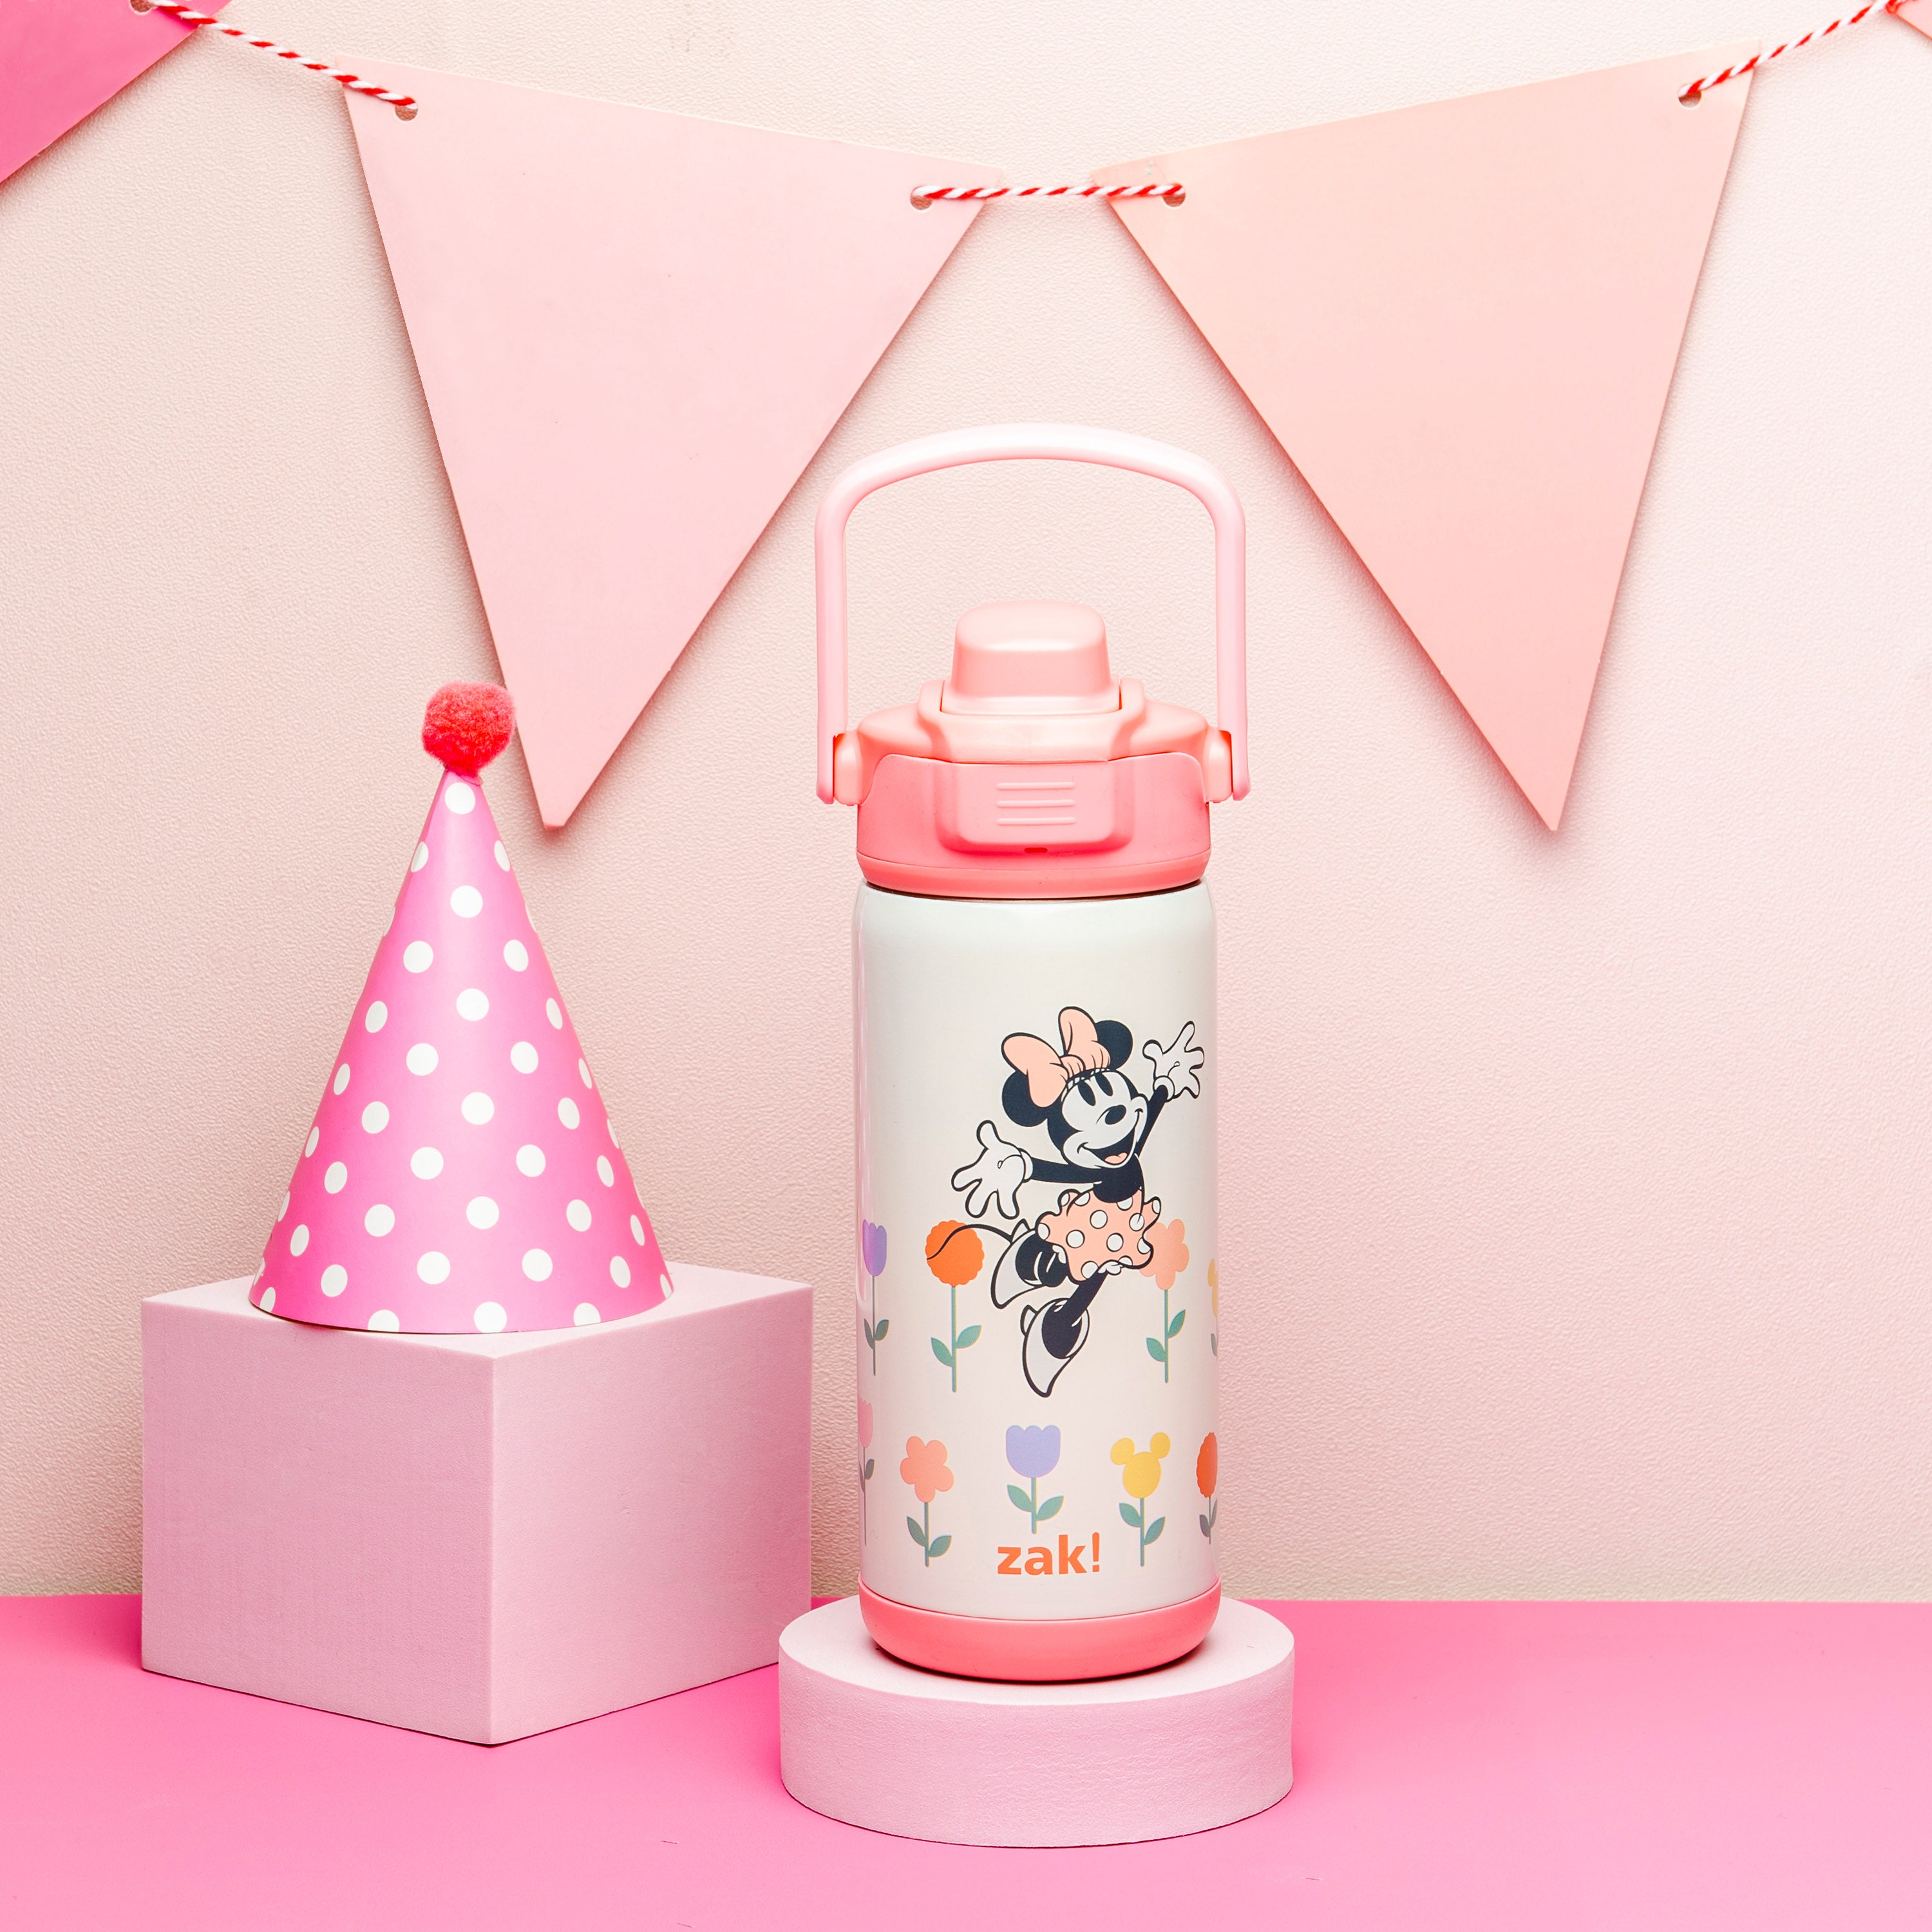 Minnie Mouse Water Bottle Girls  Water Bottle Disney Princesses